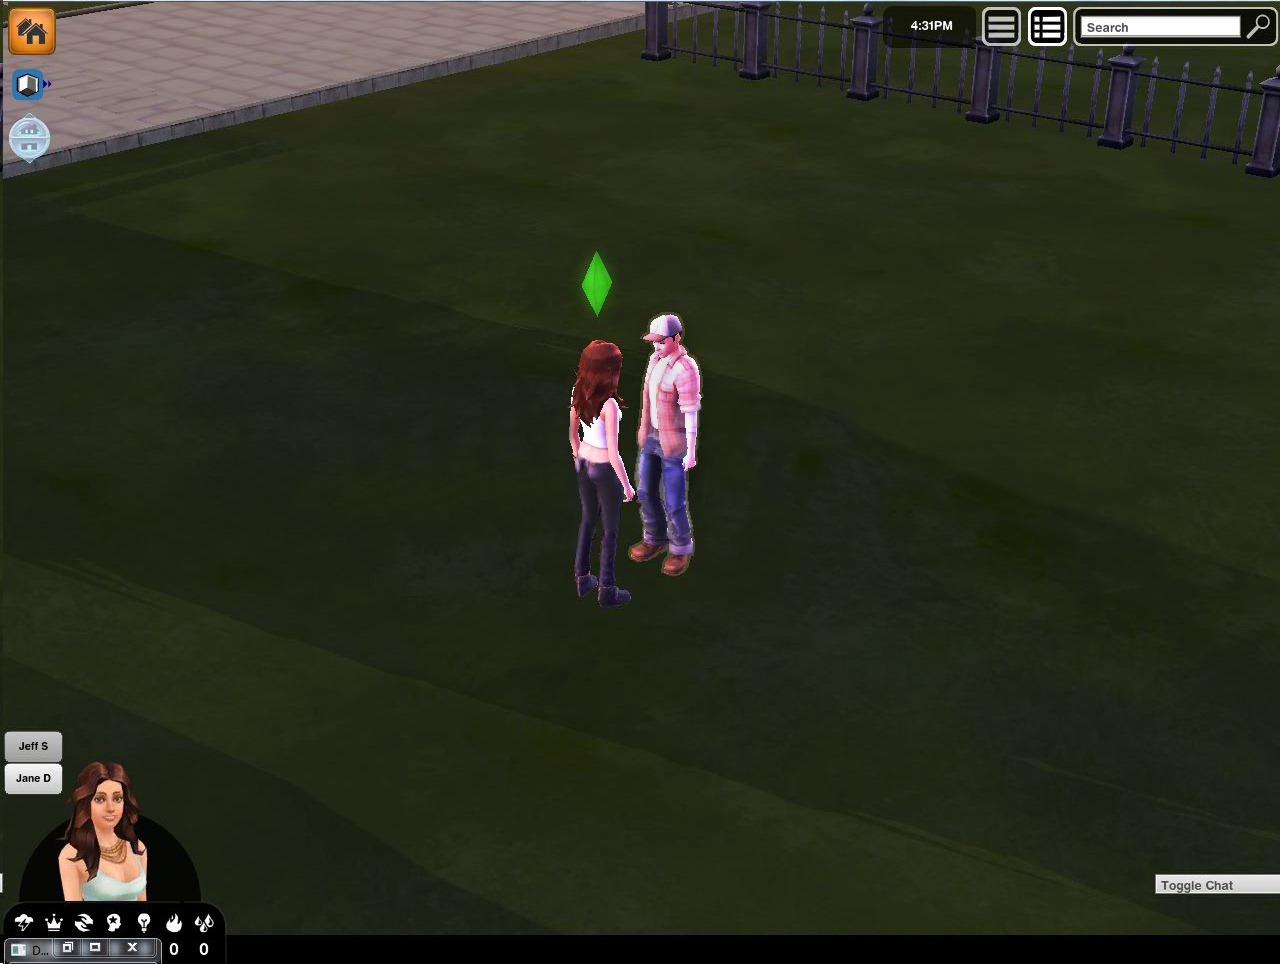 O Polêmico Desenvolvimento Conturbado do The Sims 4